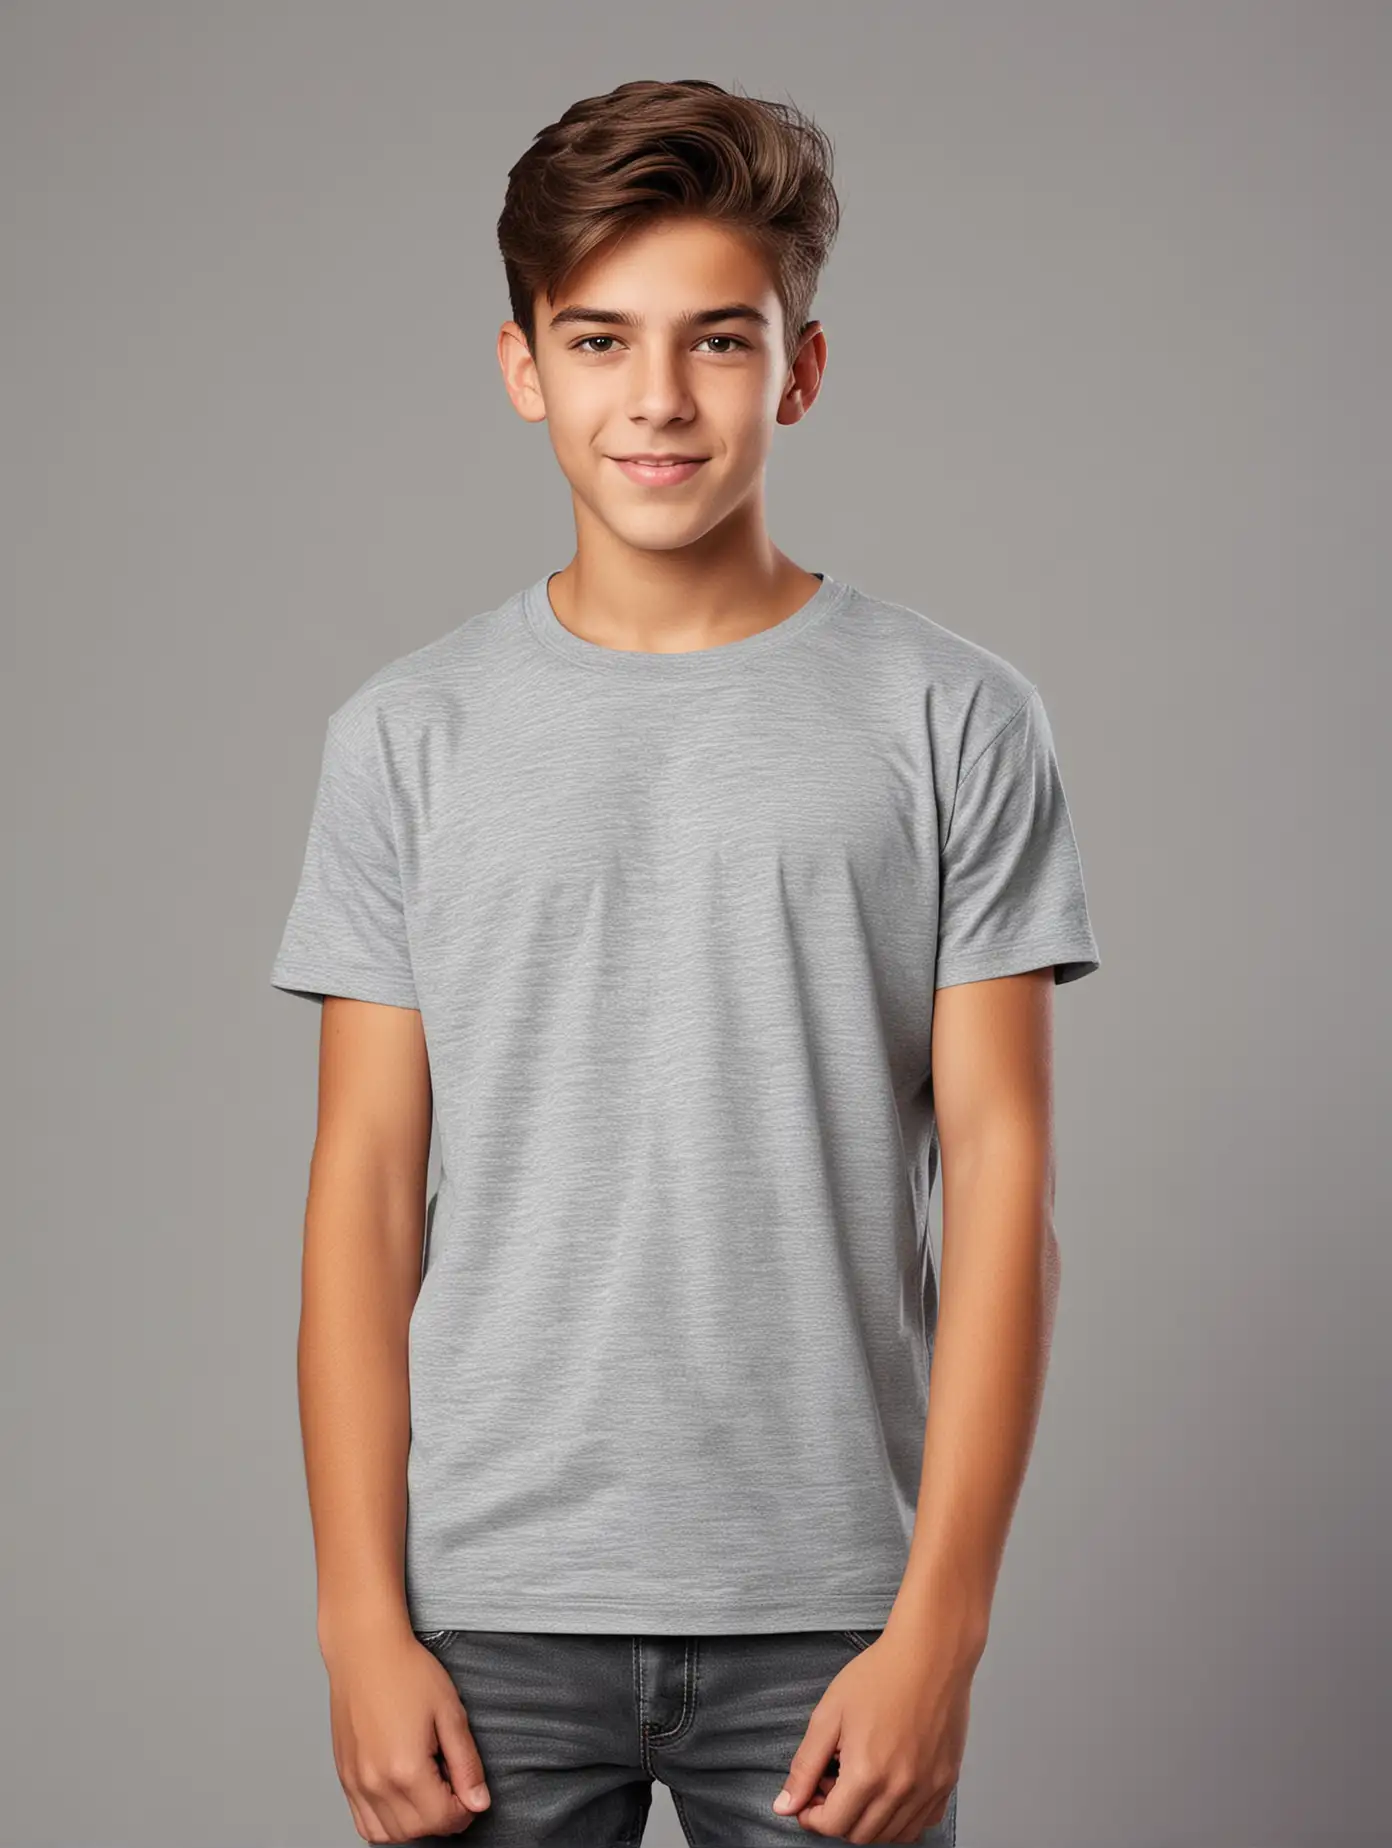 Teenage Boy in Casual Grey TShirt